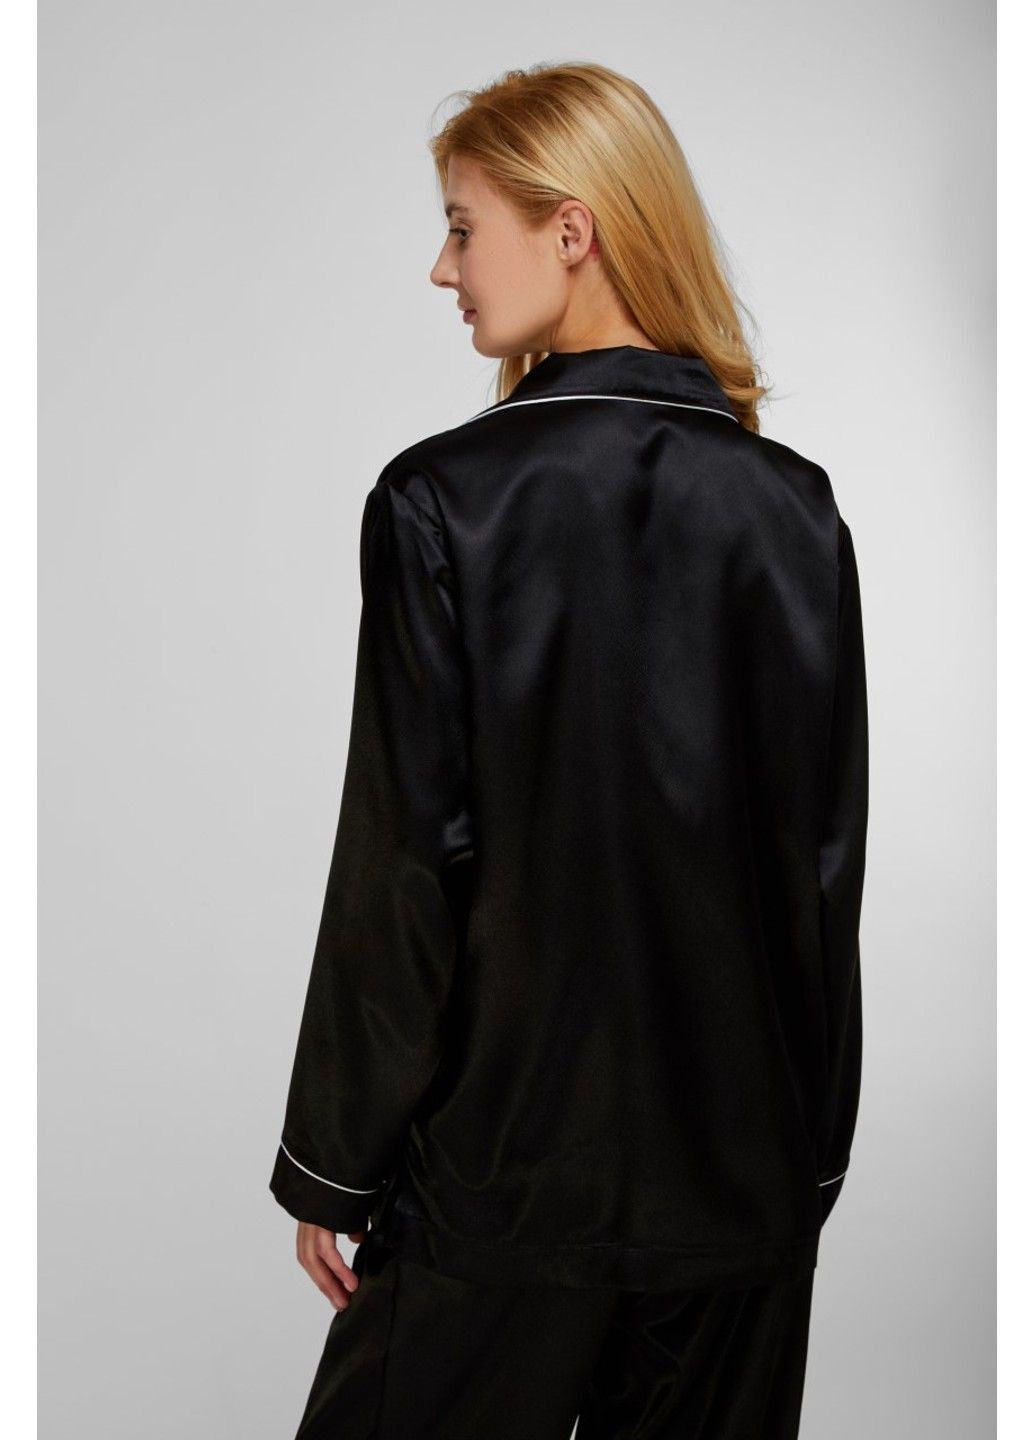 Чорна всесезон блуза з довгими рукавами із атласного полотна чорна merry dancers kleo 3530 Naviale